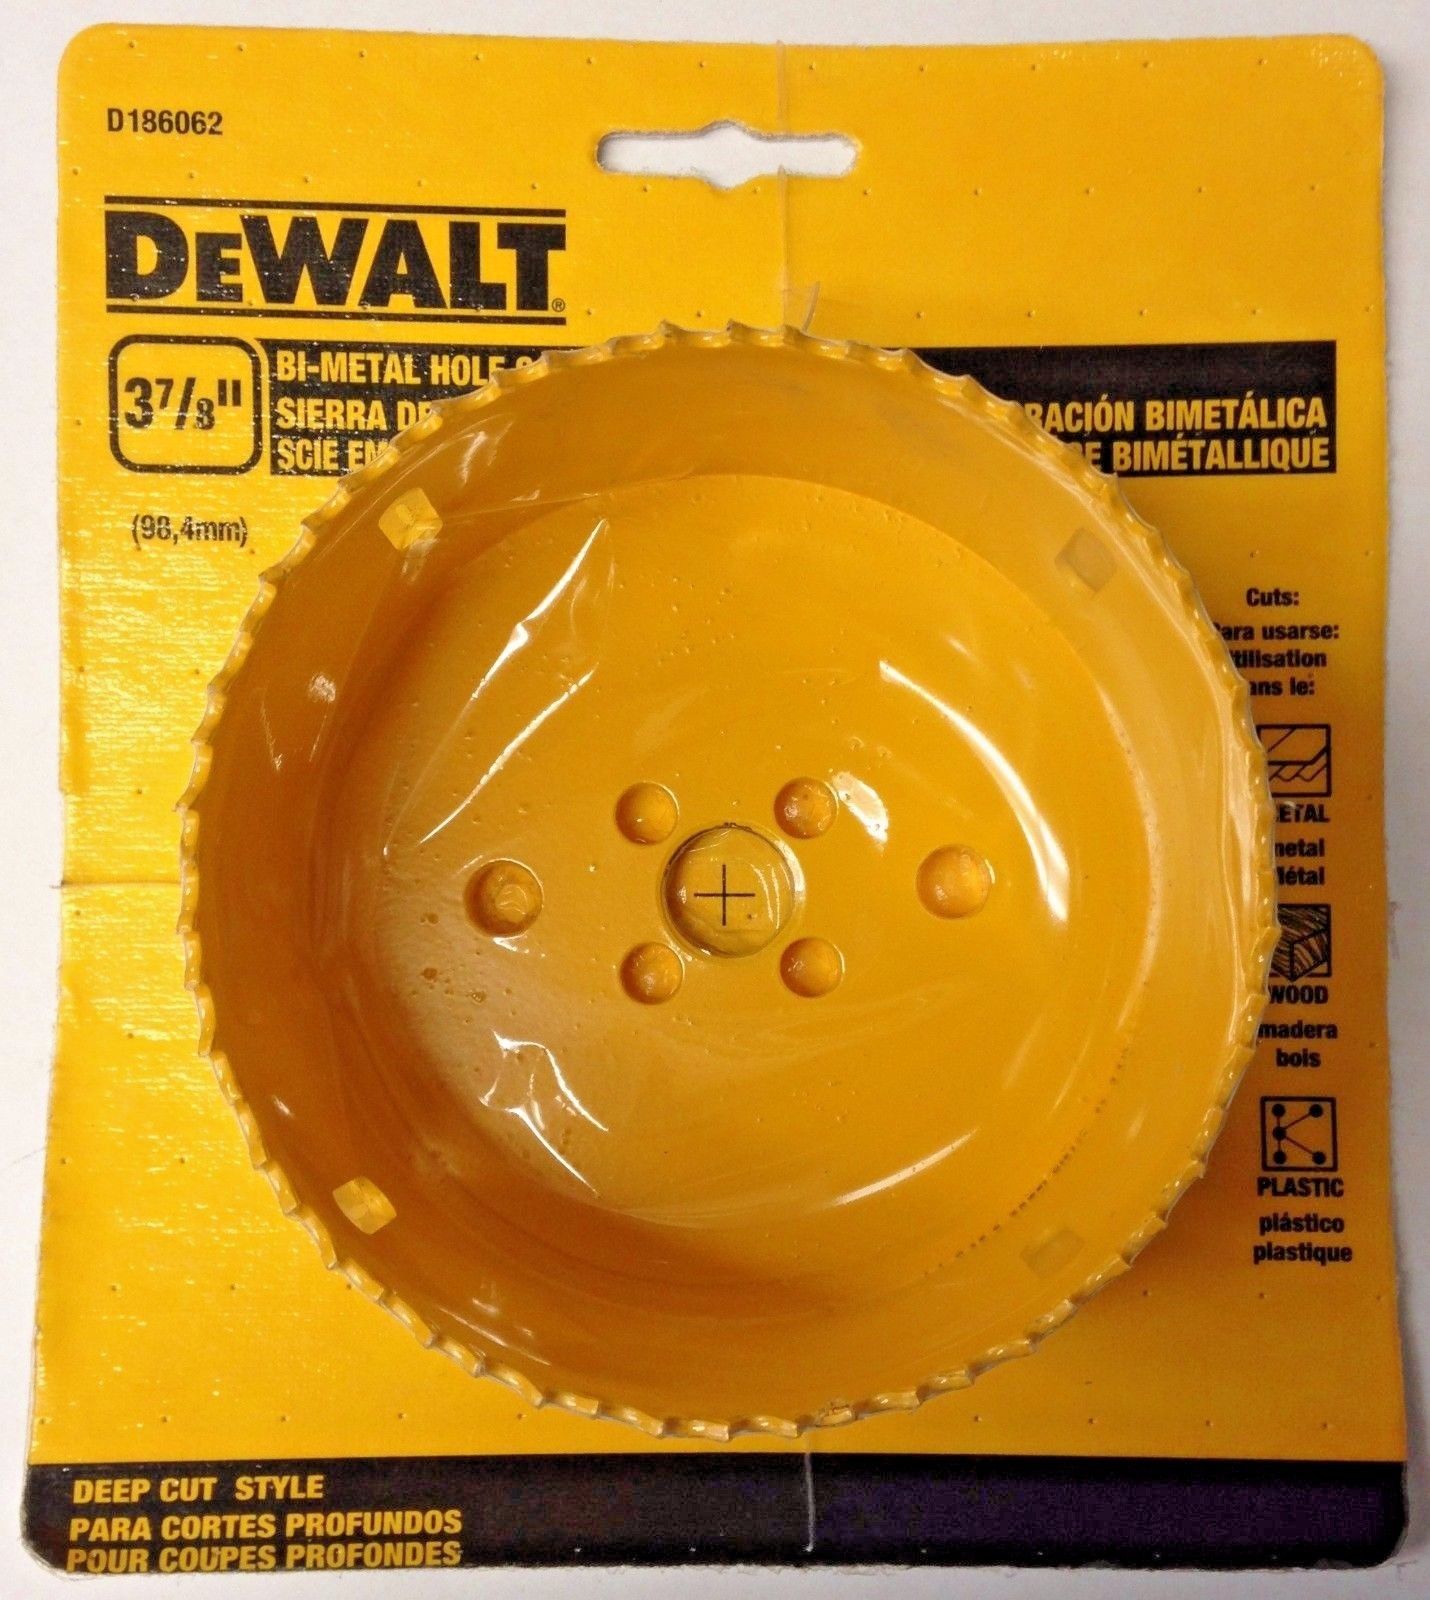 Dewalt D186062 3-7/8" Deep Cut Style Bi-Metal Hole Saw USA